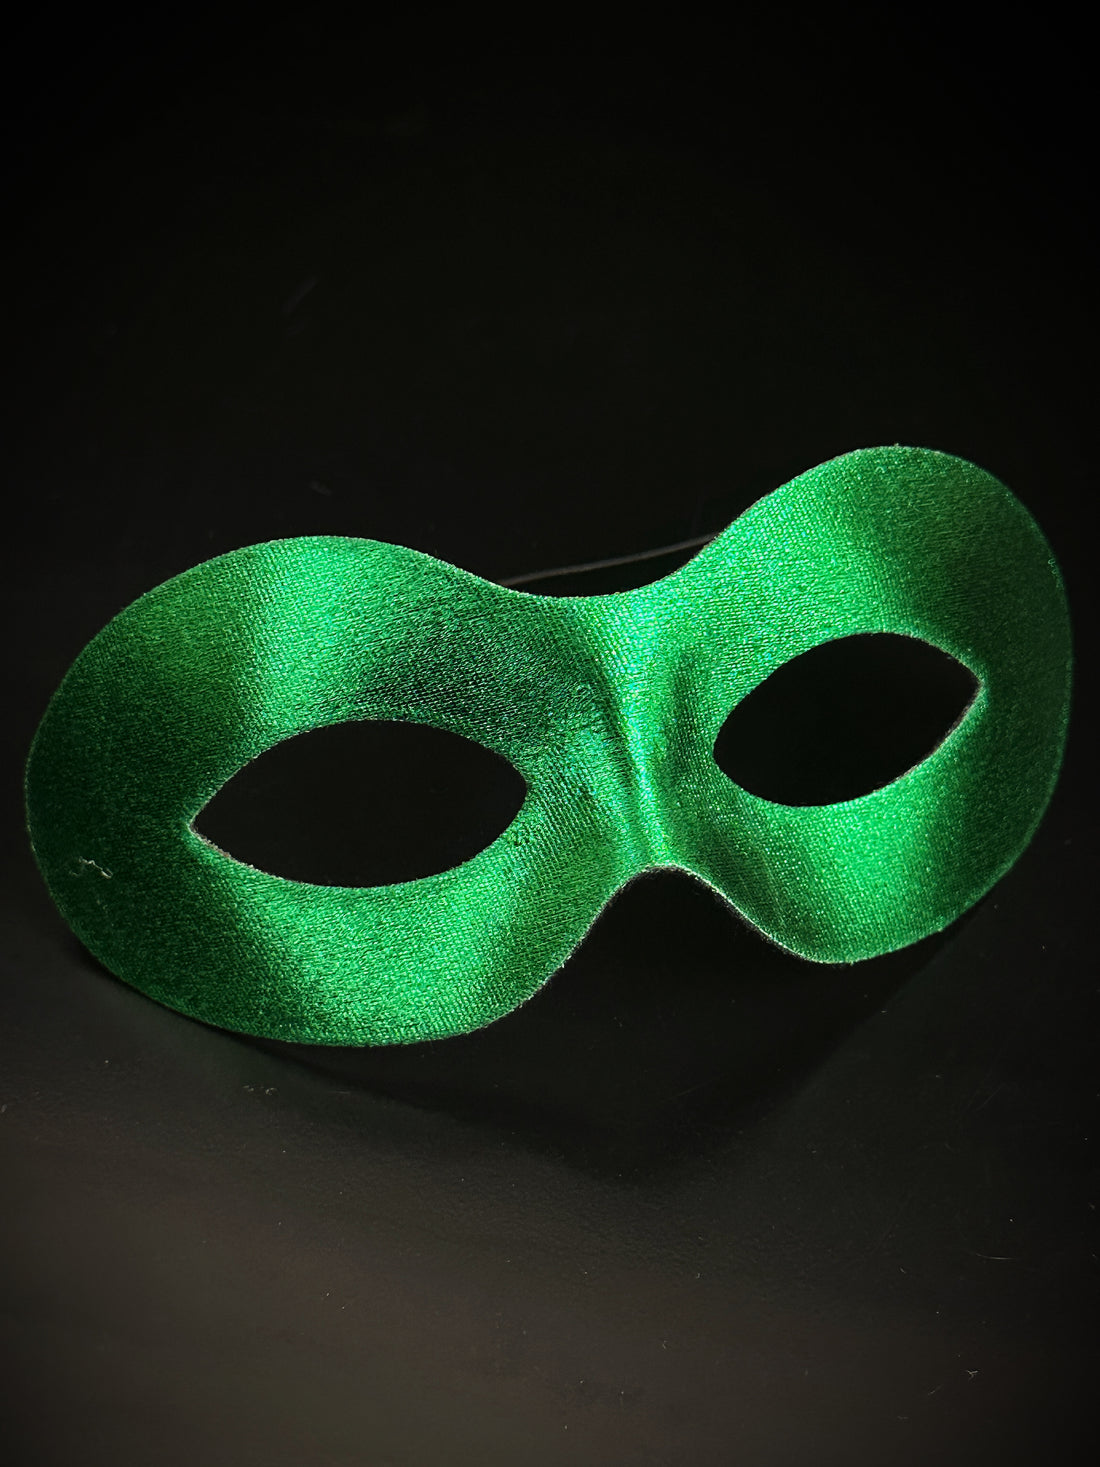 Green masquerade mask for sale in bulk.